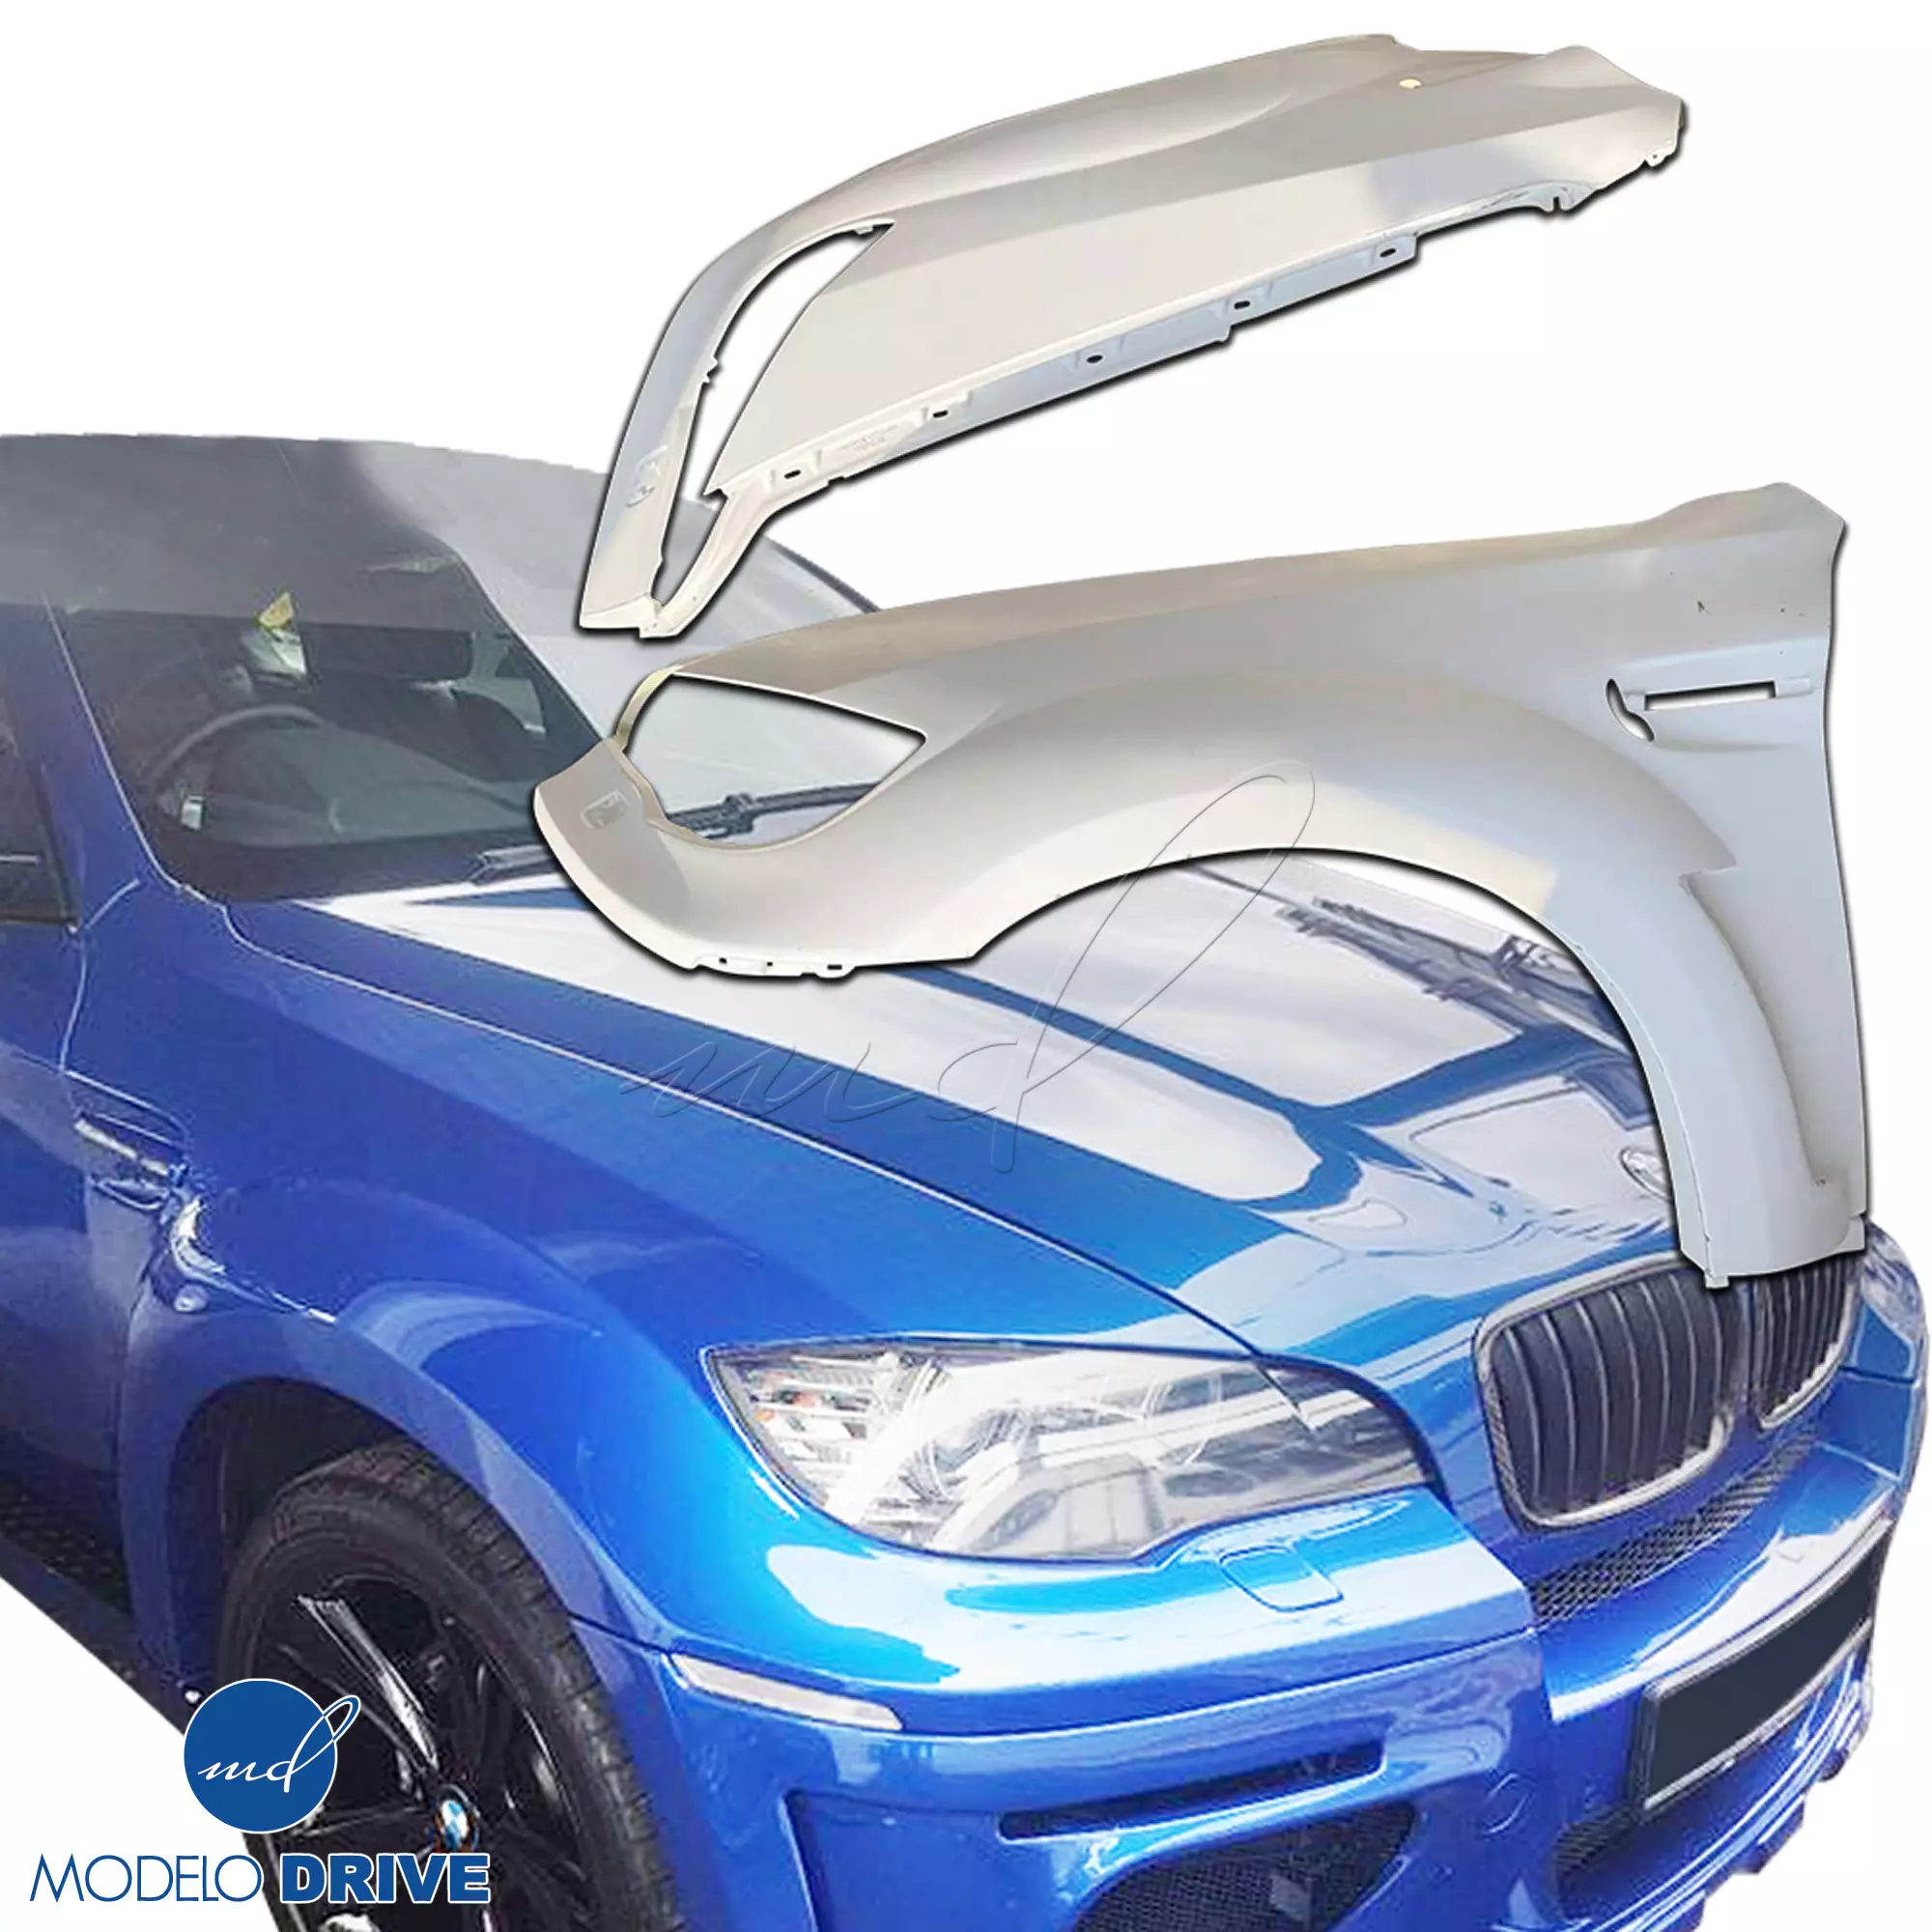 ModeloDrive FRP HAMA Wide Body Kit > BMW X6 E71 2008-2014 - Image 46